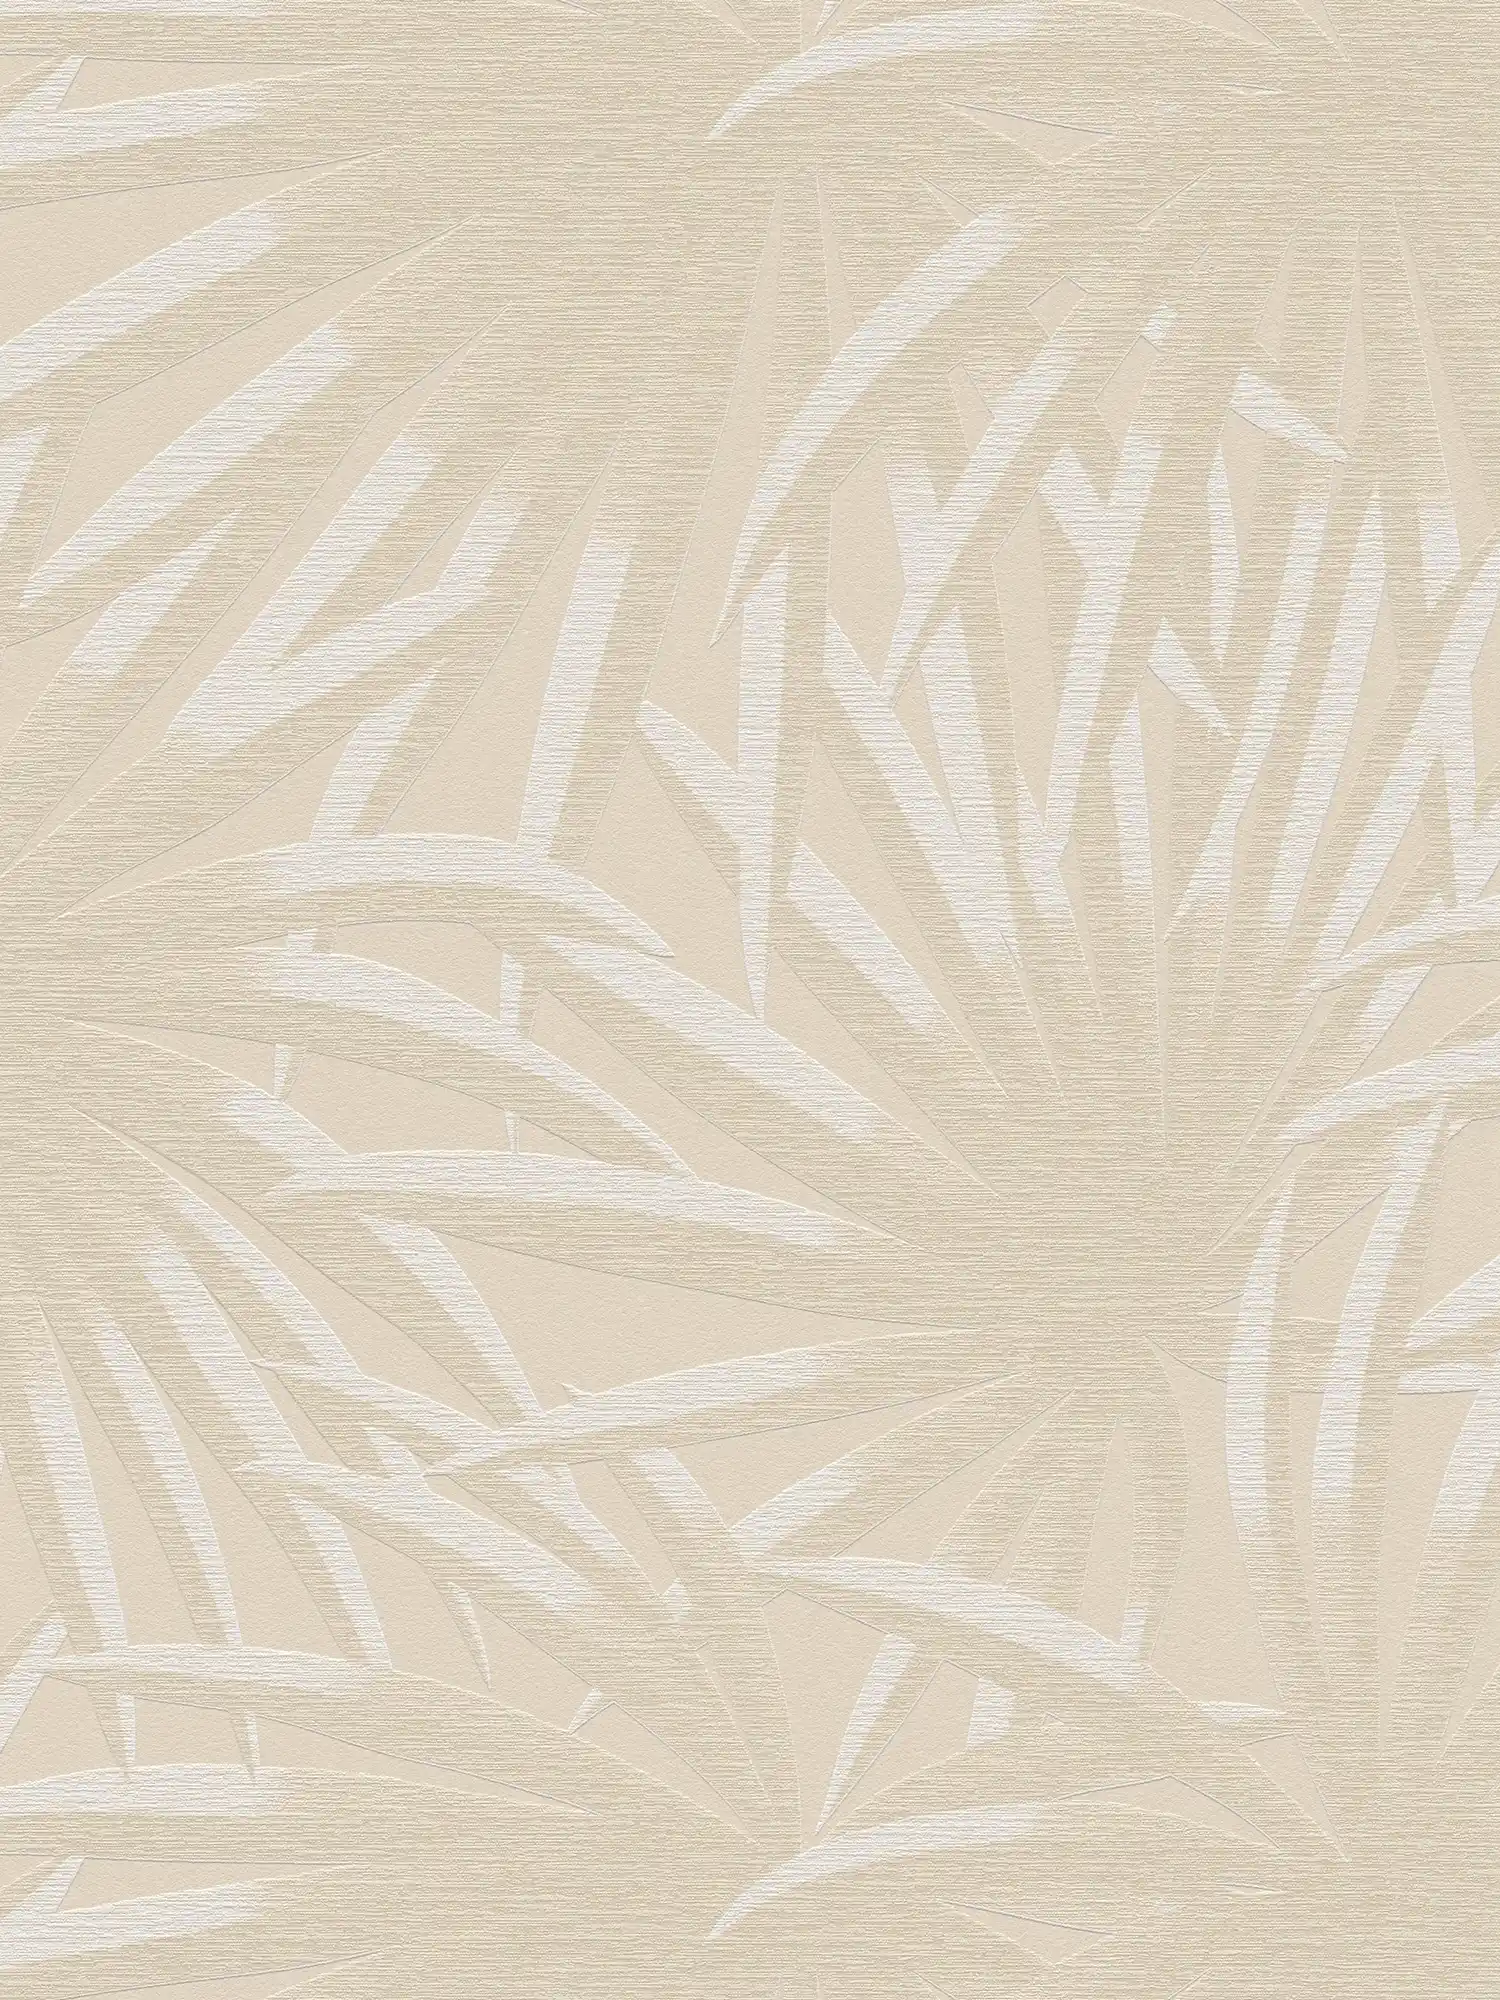 Carta da parati non tessuta floreale con foglie di palma - beige, bianco
